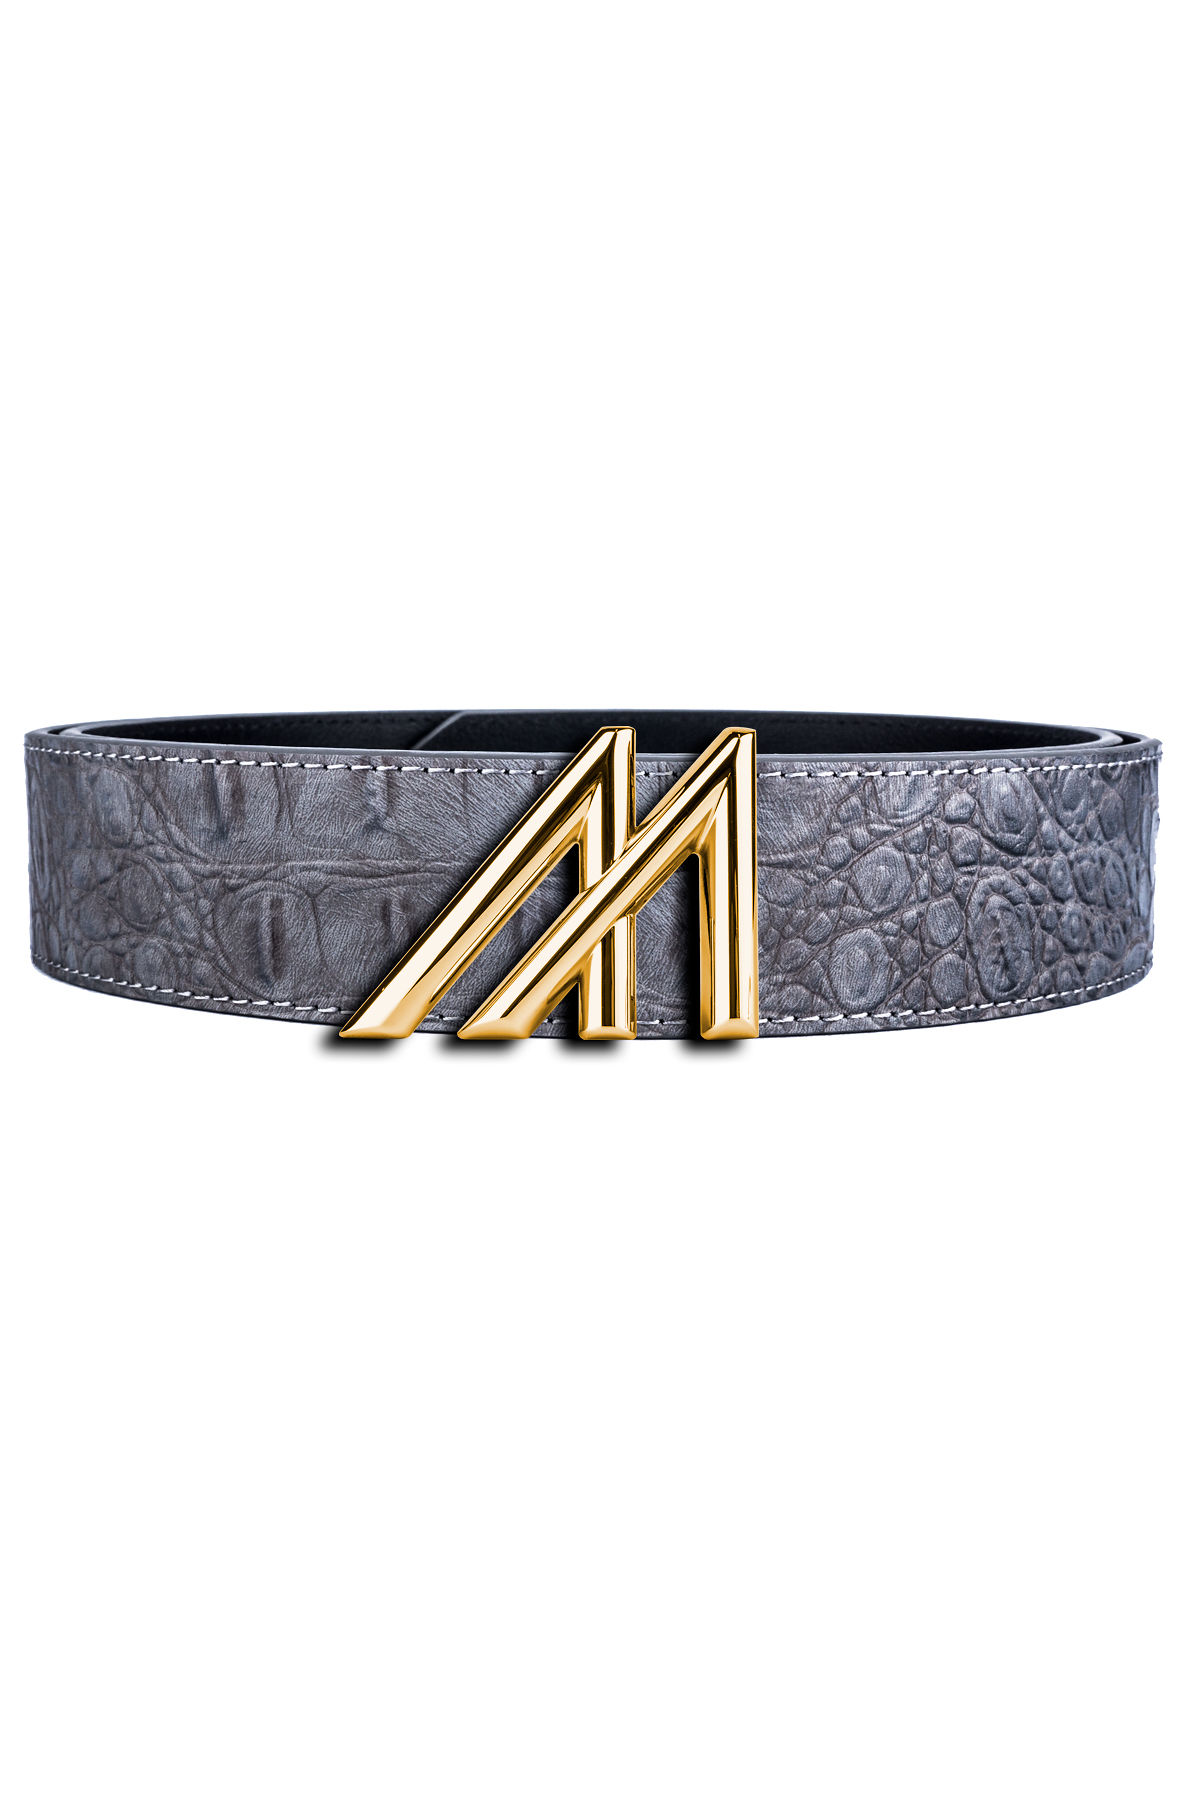 Mint Crocodile Belt (Gold/Black)